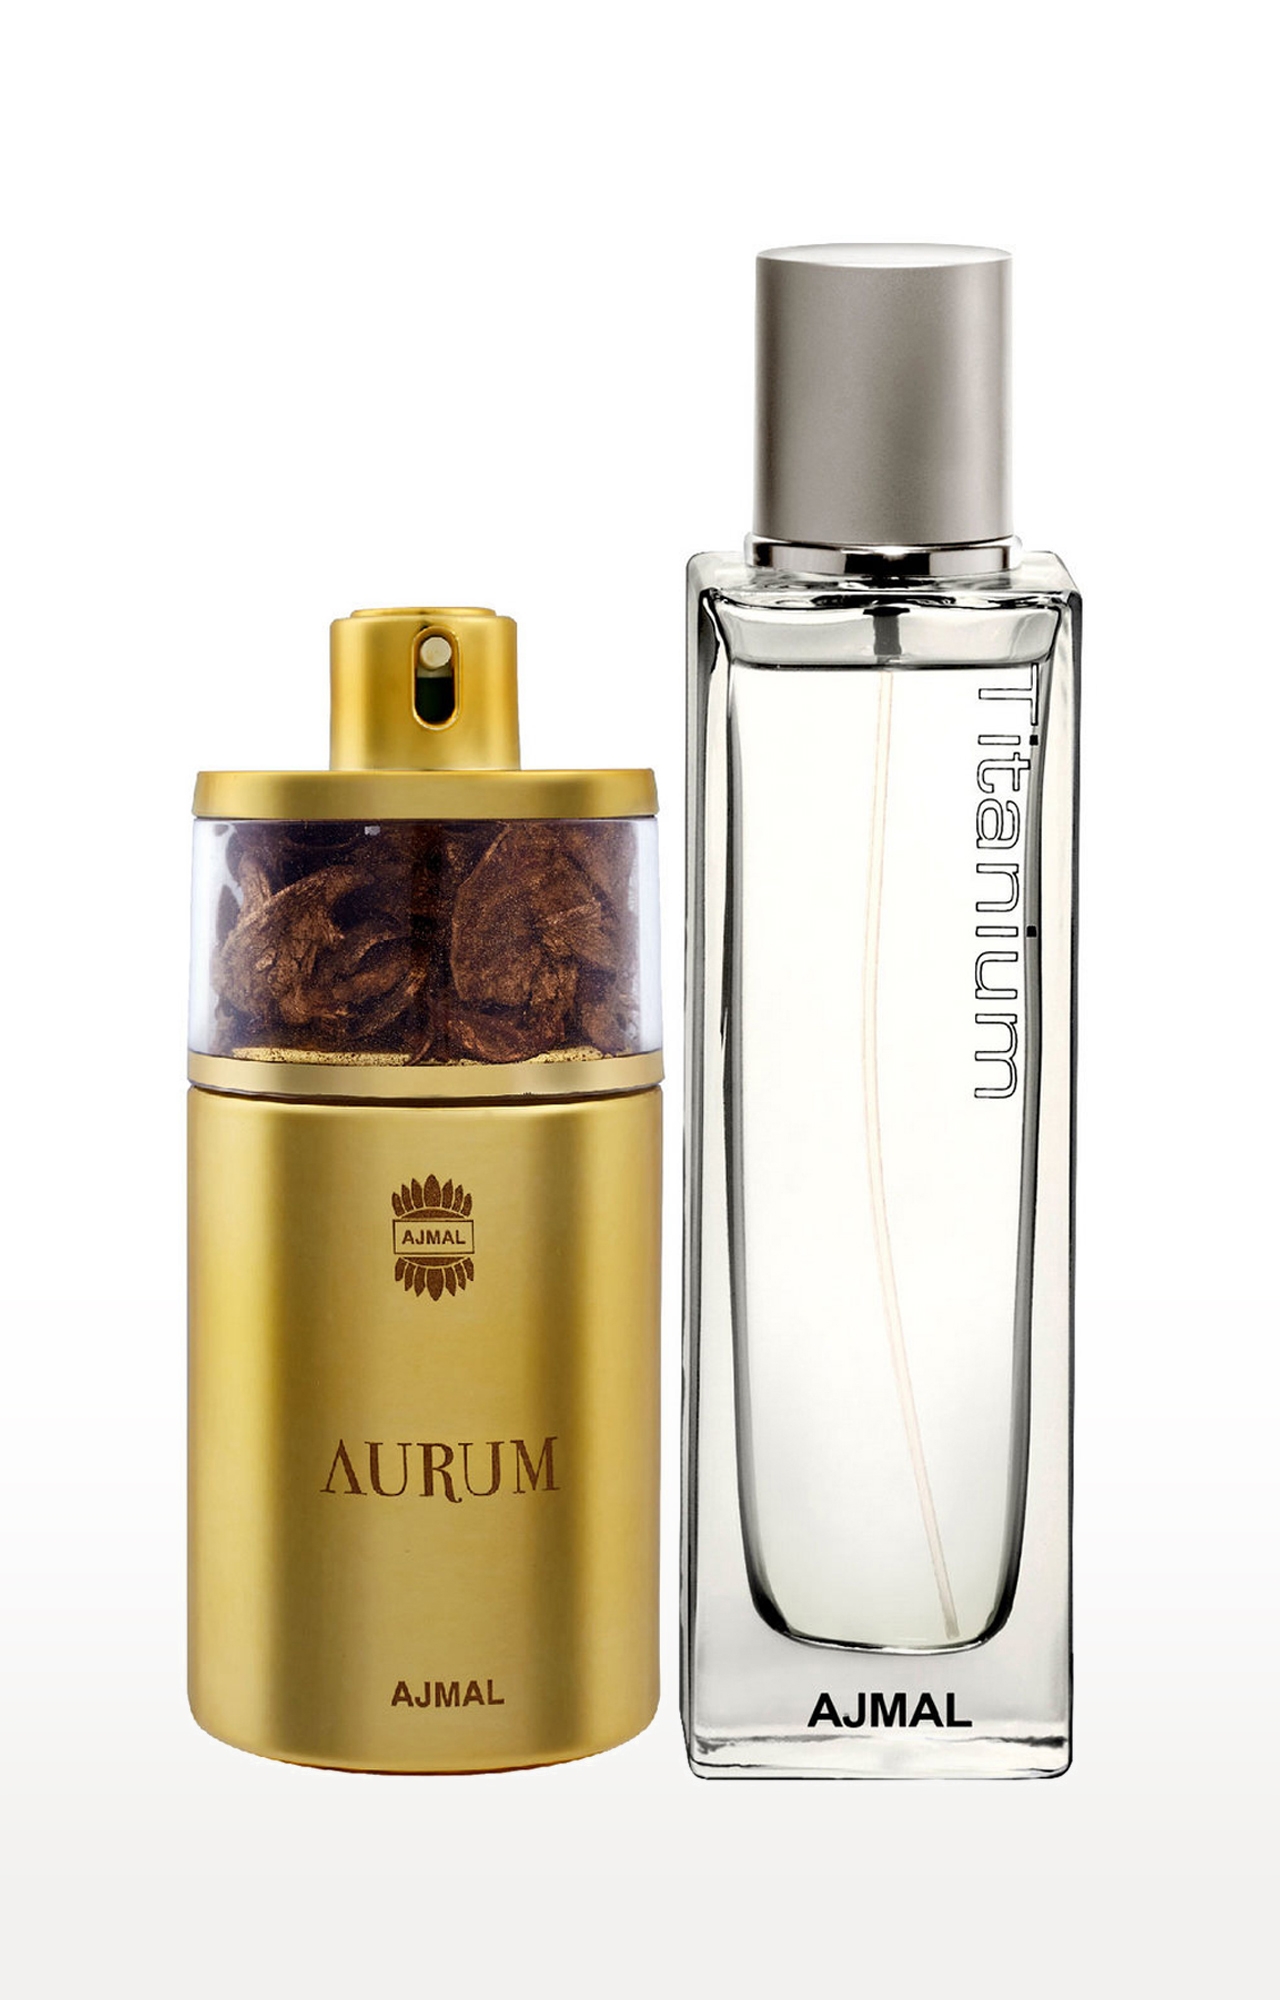 Ajmal | Ajmal Aurum EDP Fruity Floral Perfume 75ml for Women and Titanium EDP Citrus Spicy Perfume 100ml for Men + 2 Parfum Testers FREE